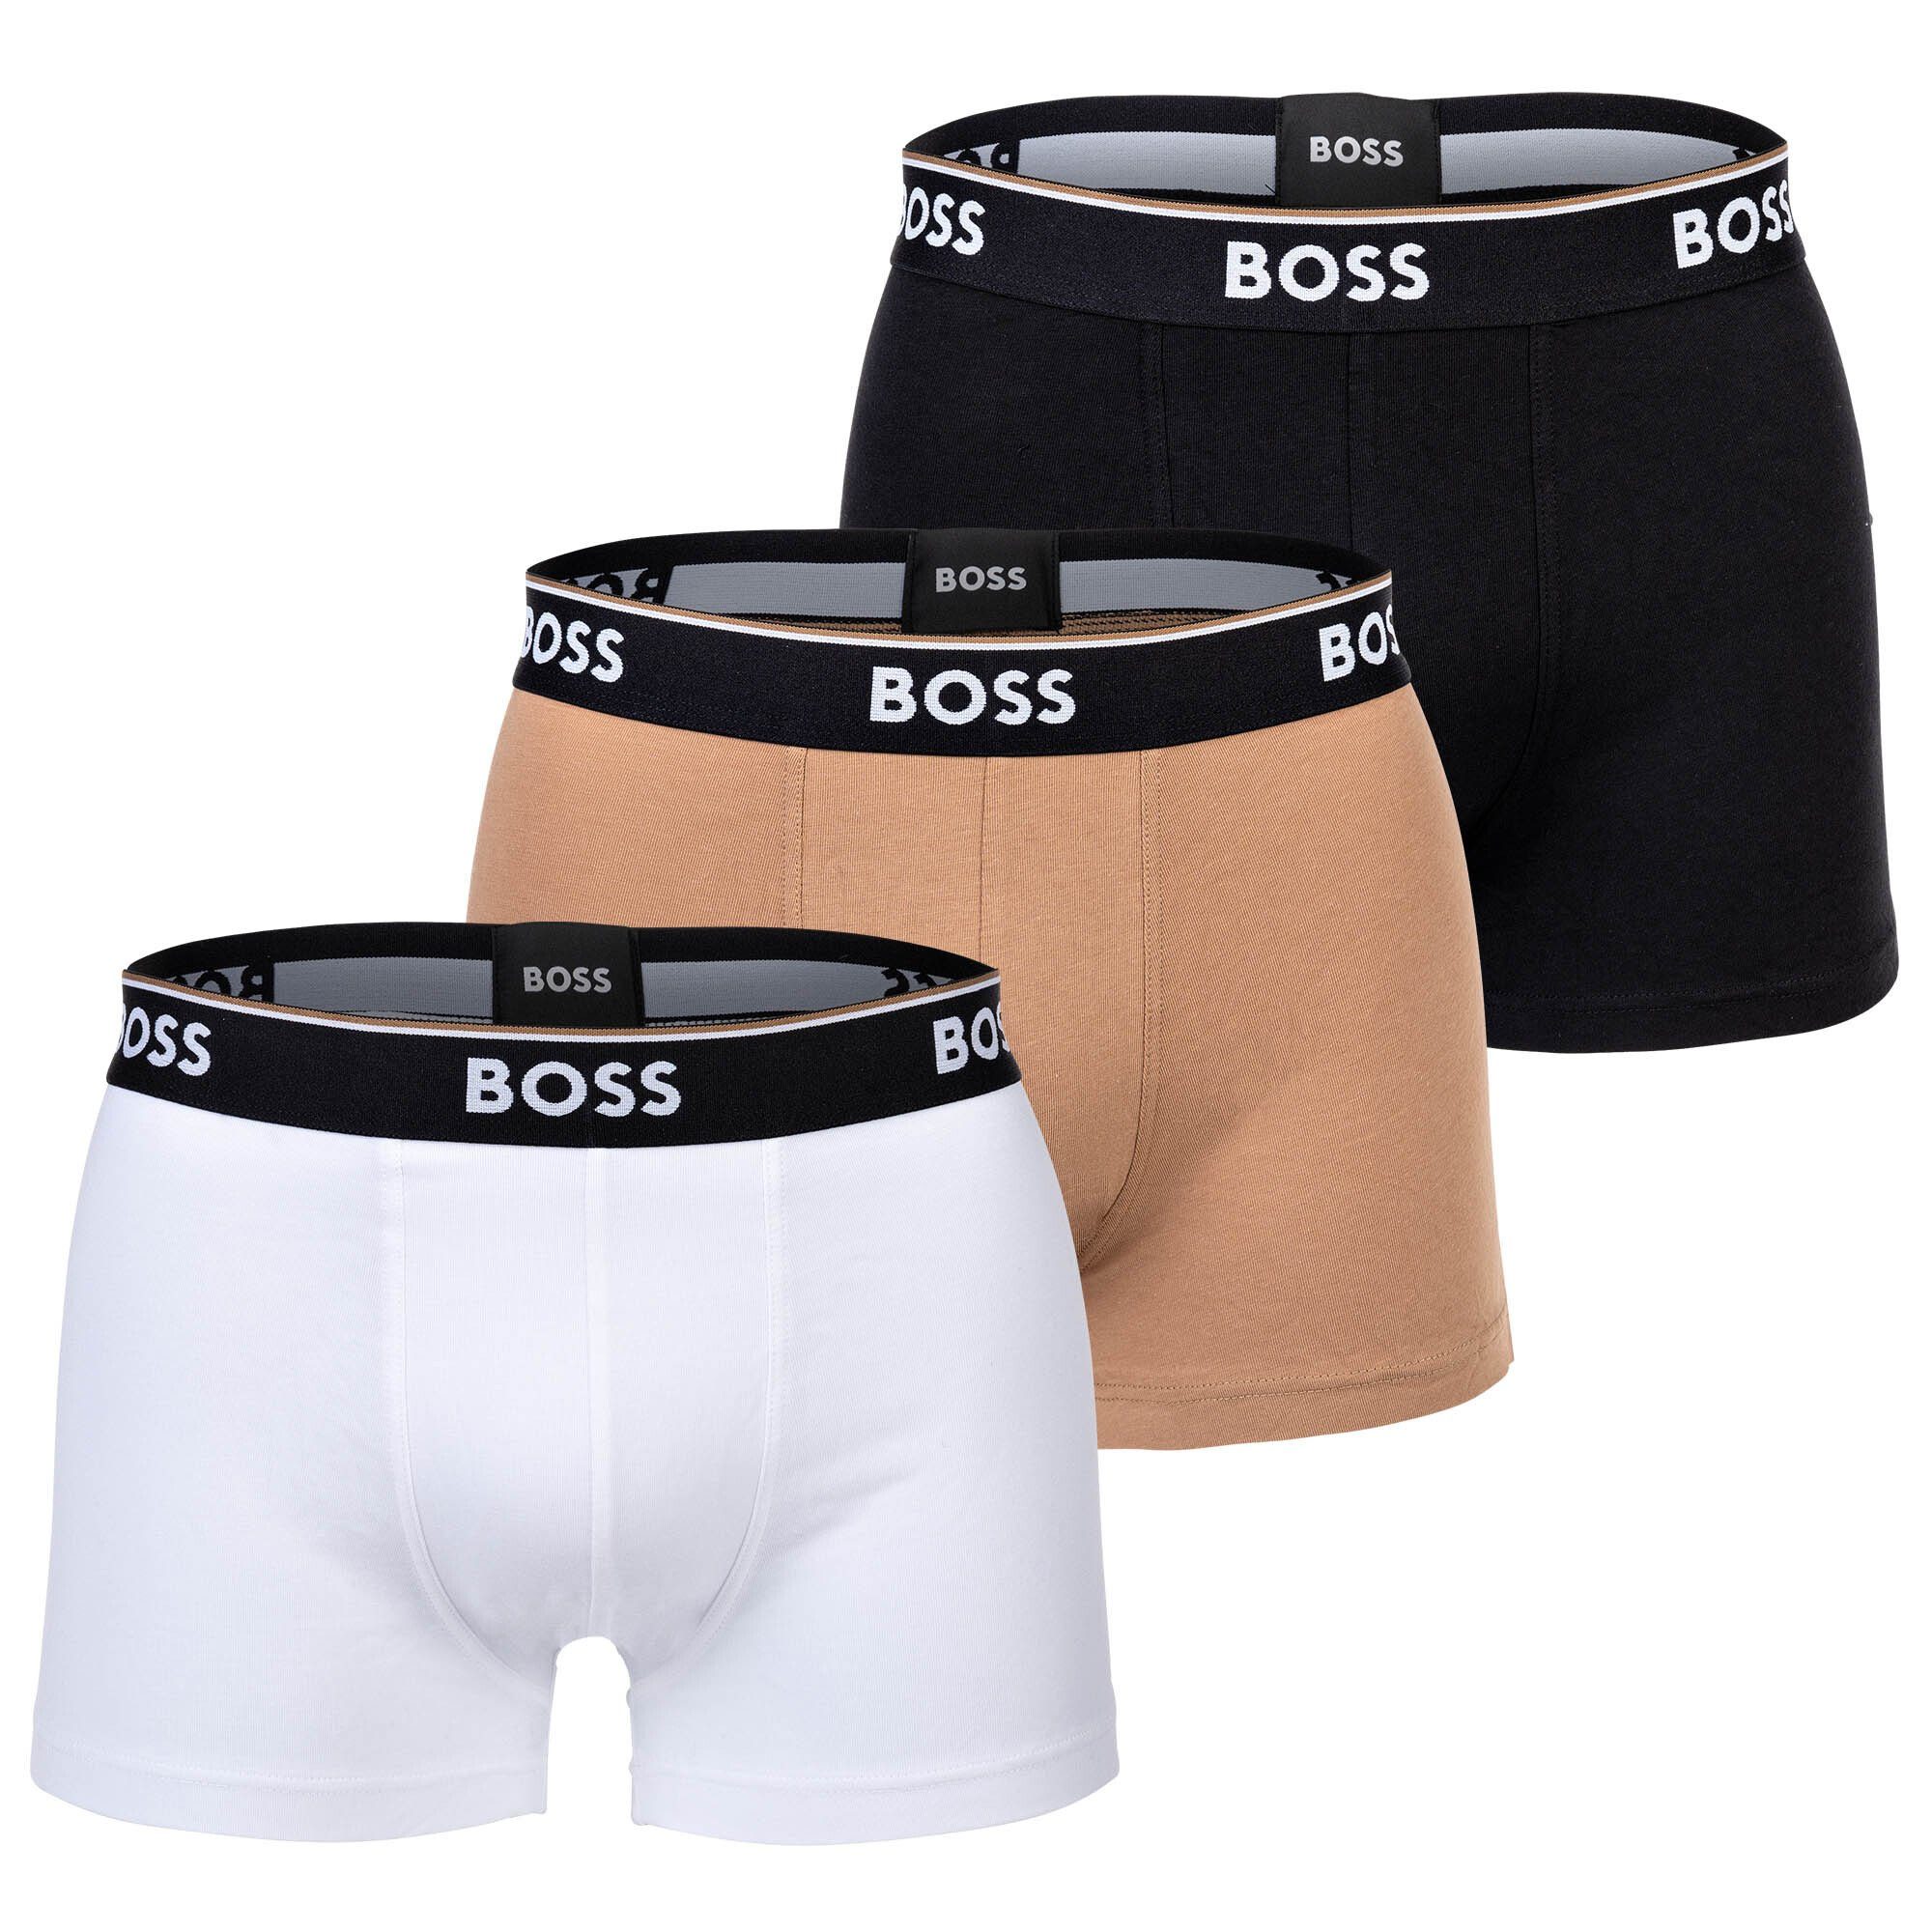 BOSS Herren - Power, Boxer Schwarz/Braun/Weiß Boxershorts Pack 3P Trunks, 3er